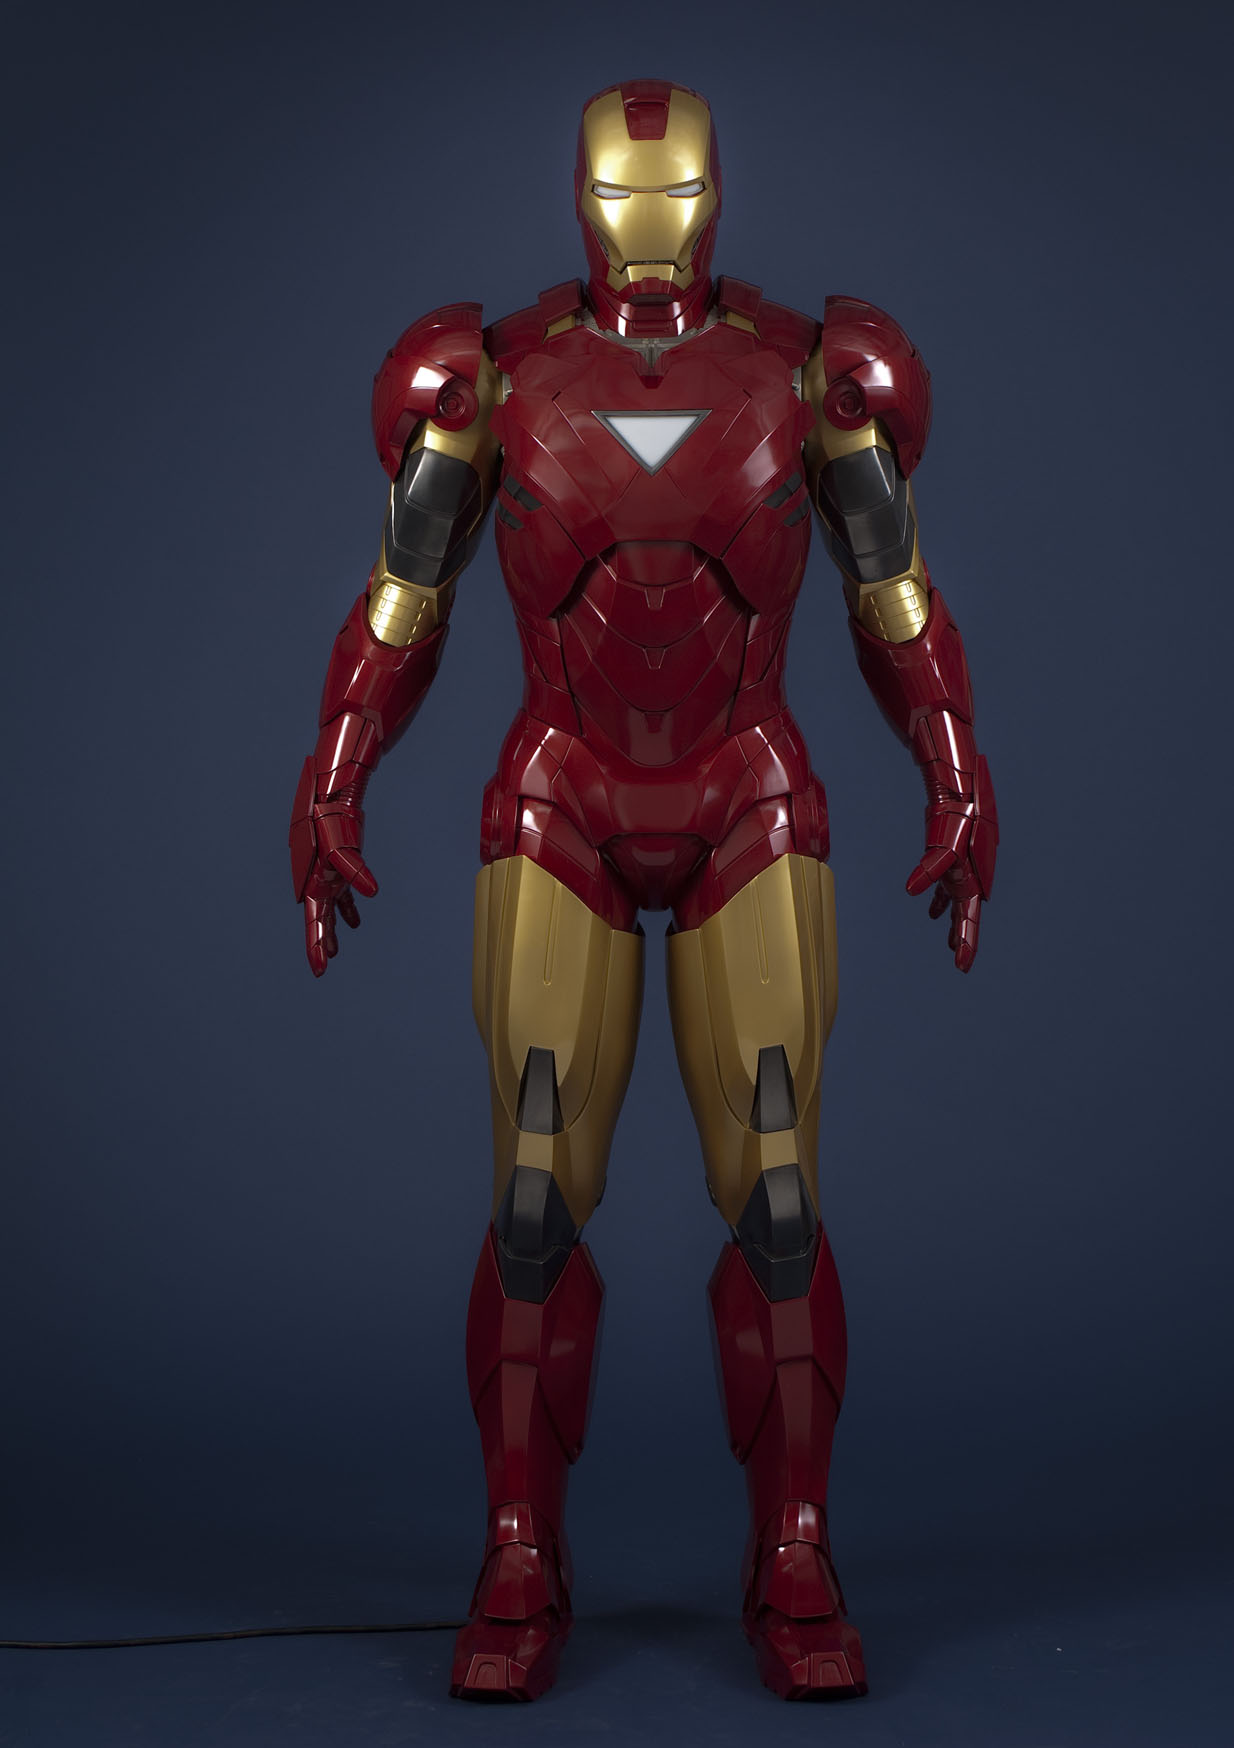 Iron Man's figure at Madame Tussauds London